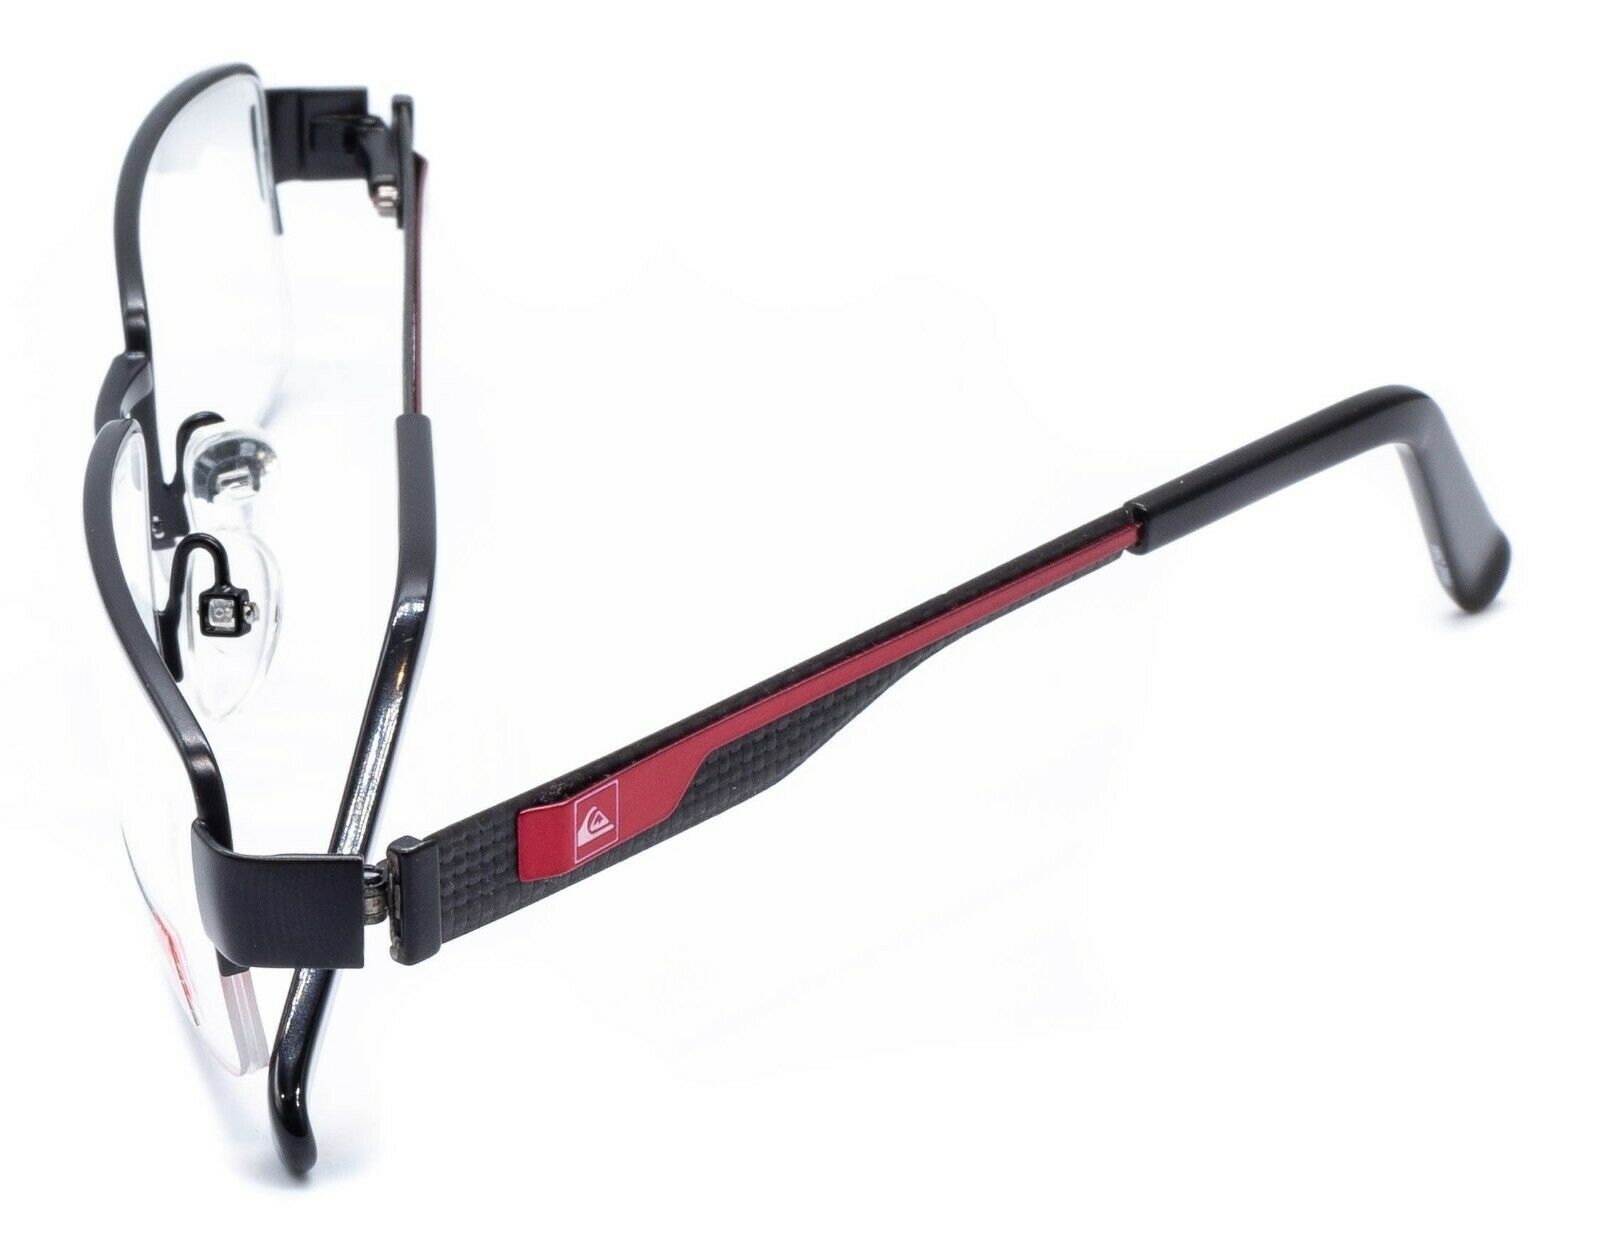 QUIKSILVER QO3690/403 54mm Black RX Optical FRAMES Glasses Eyewear Eyeglasses